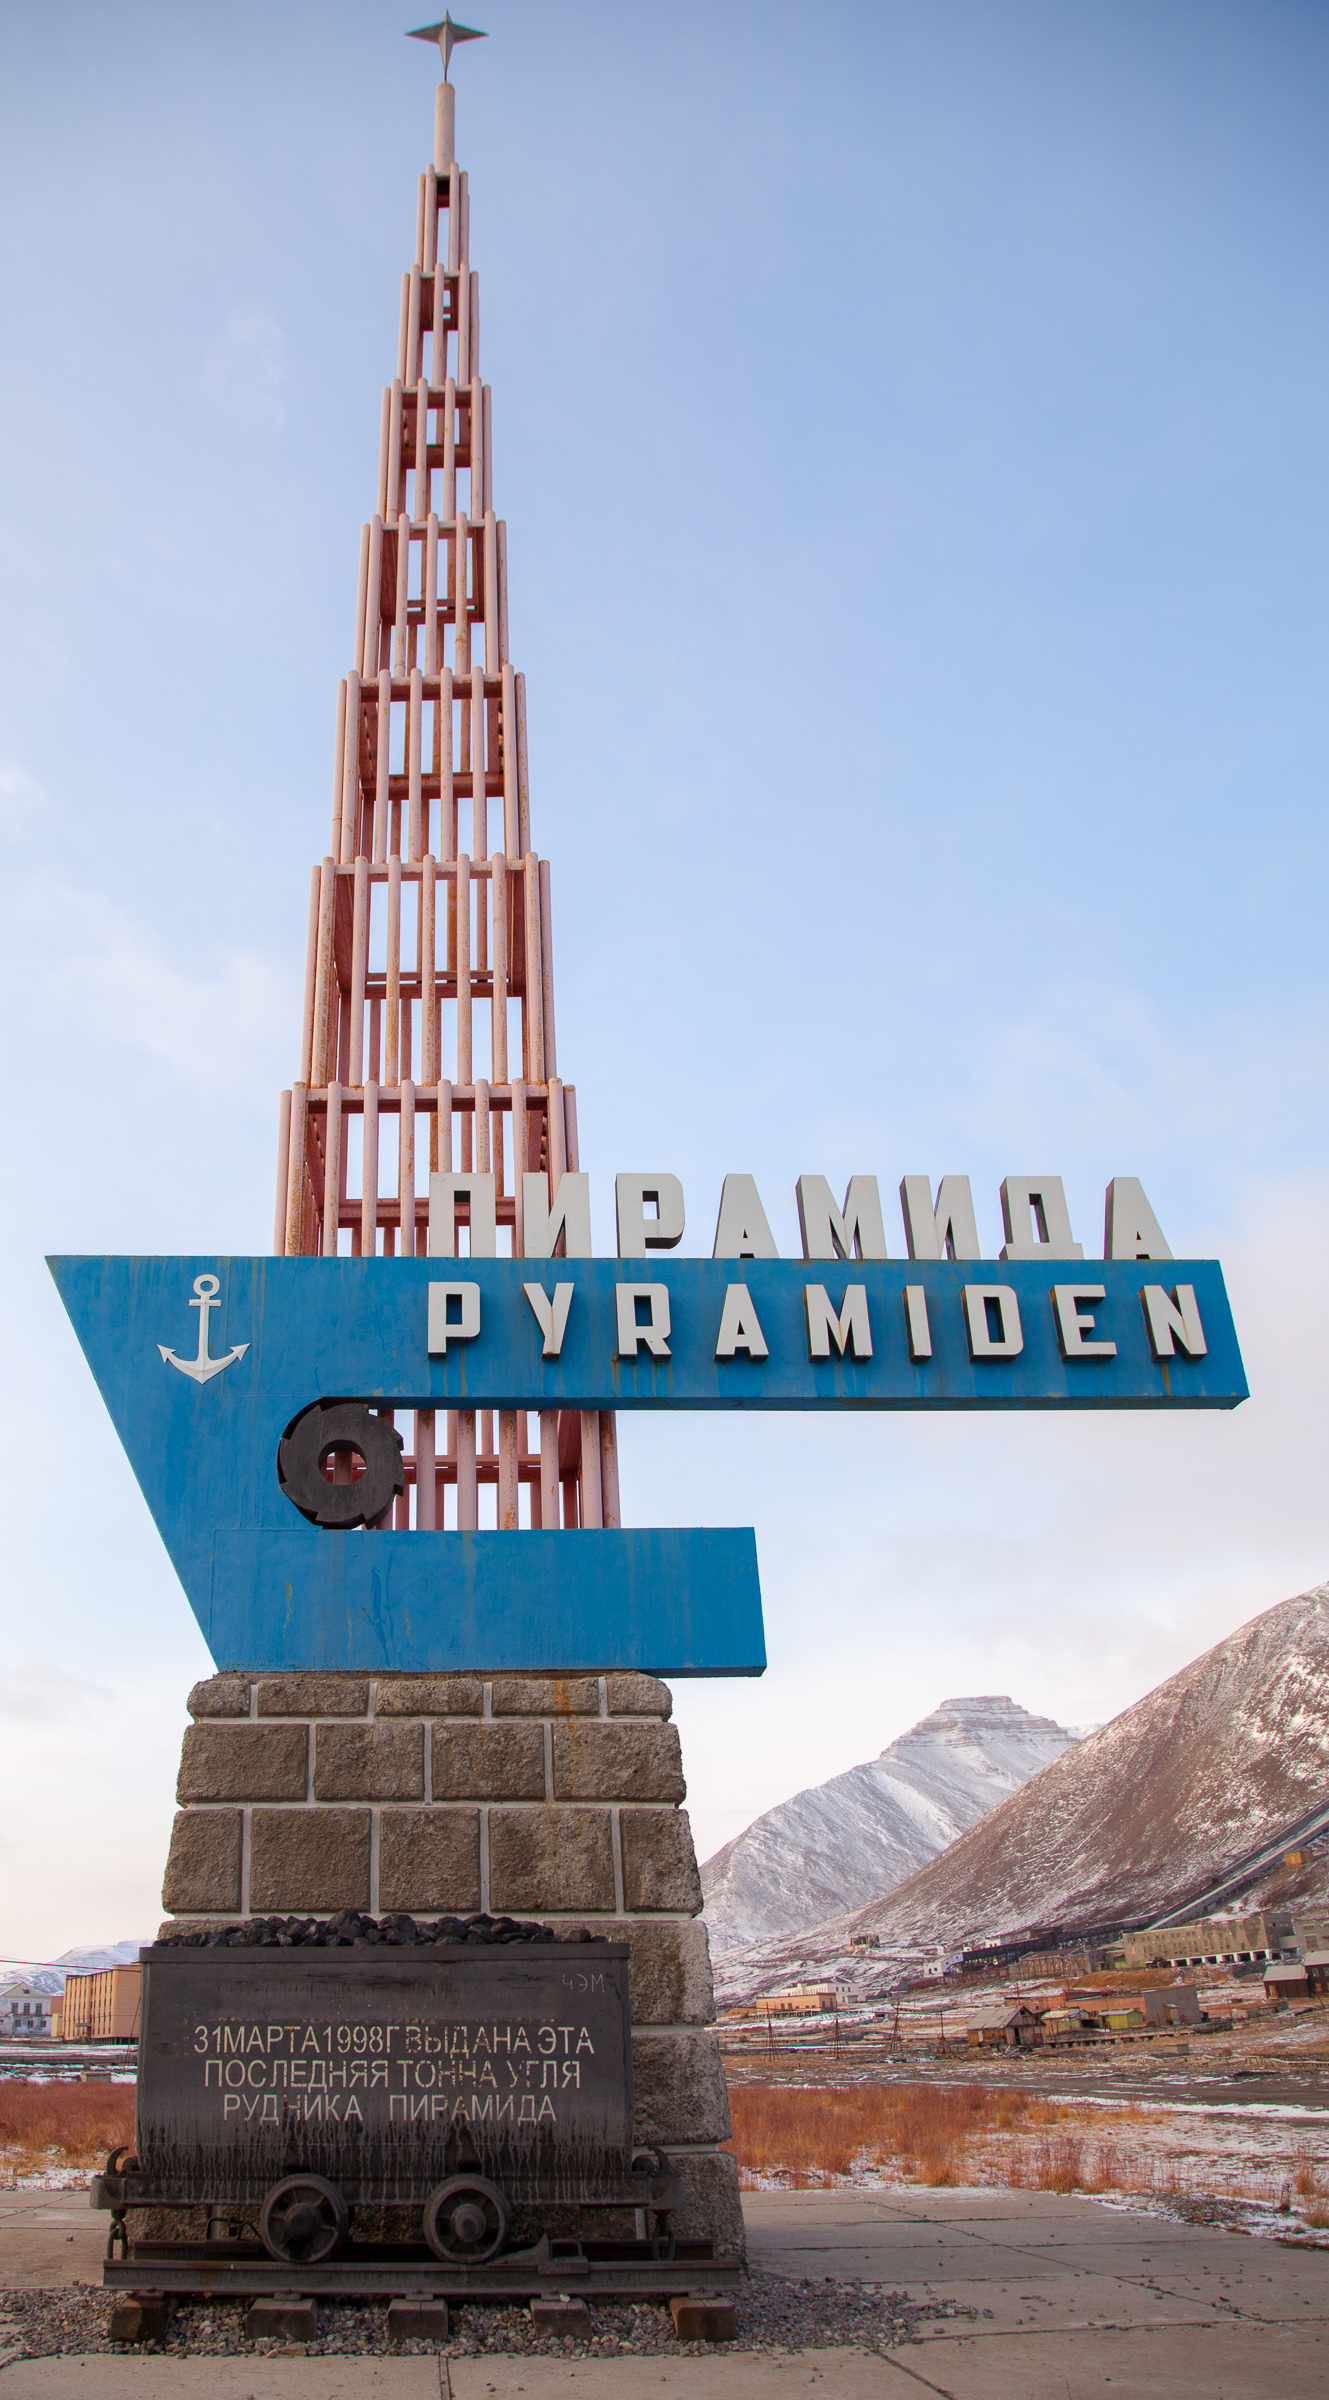 Pyramiden sign from Norway Svalbard Pyramiden